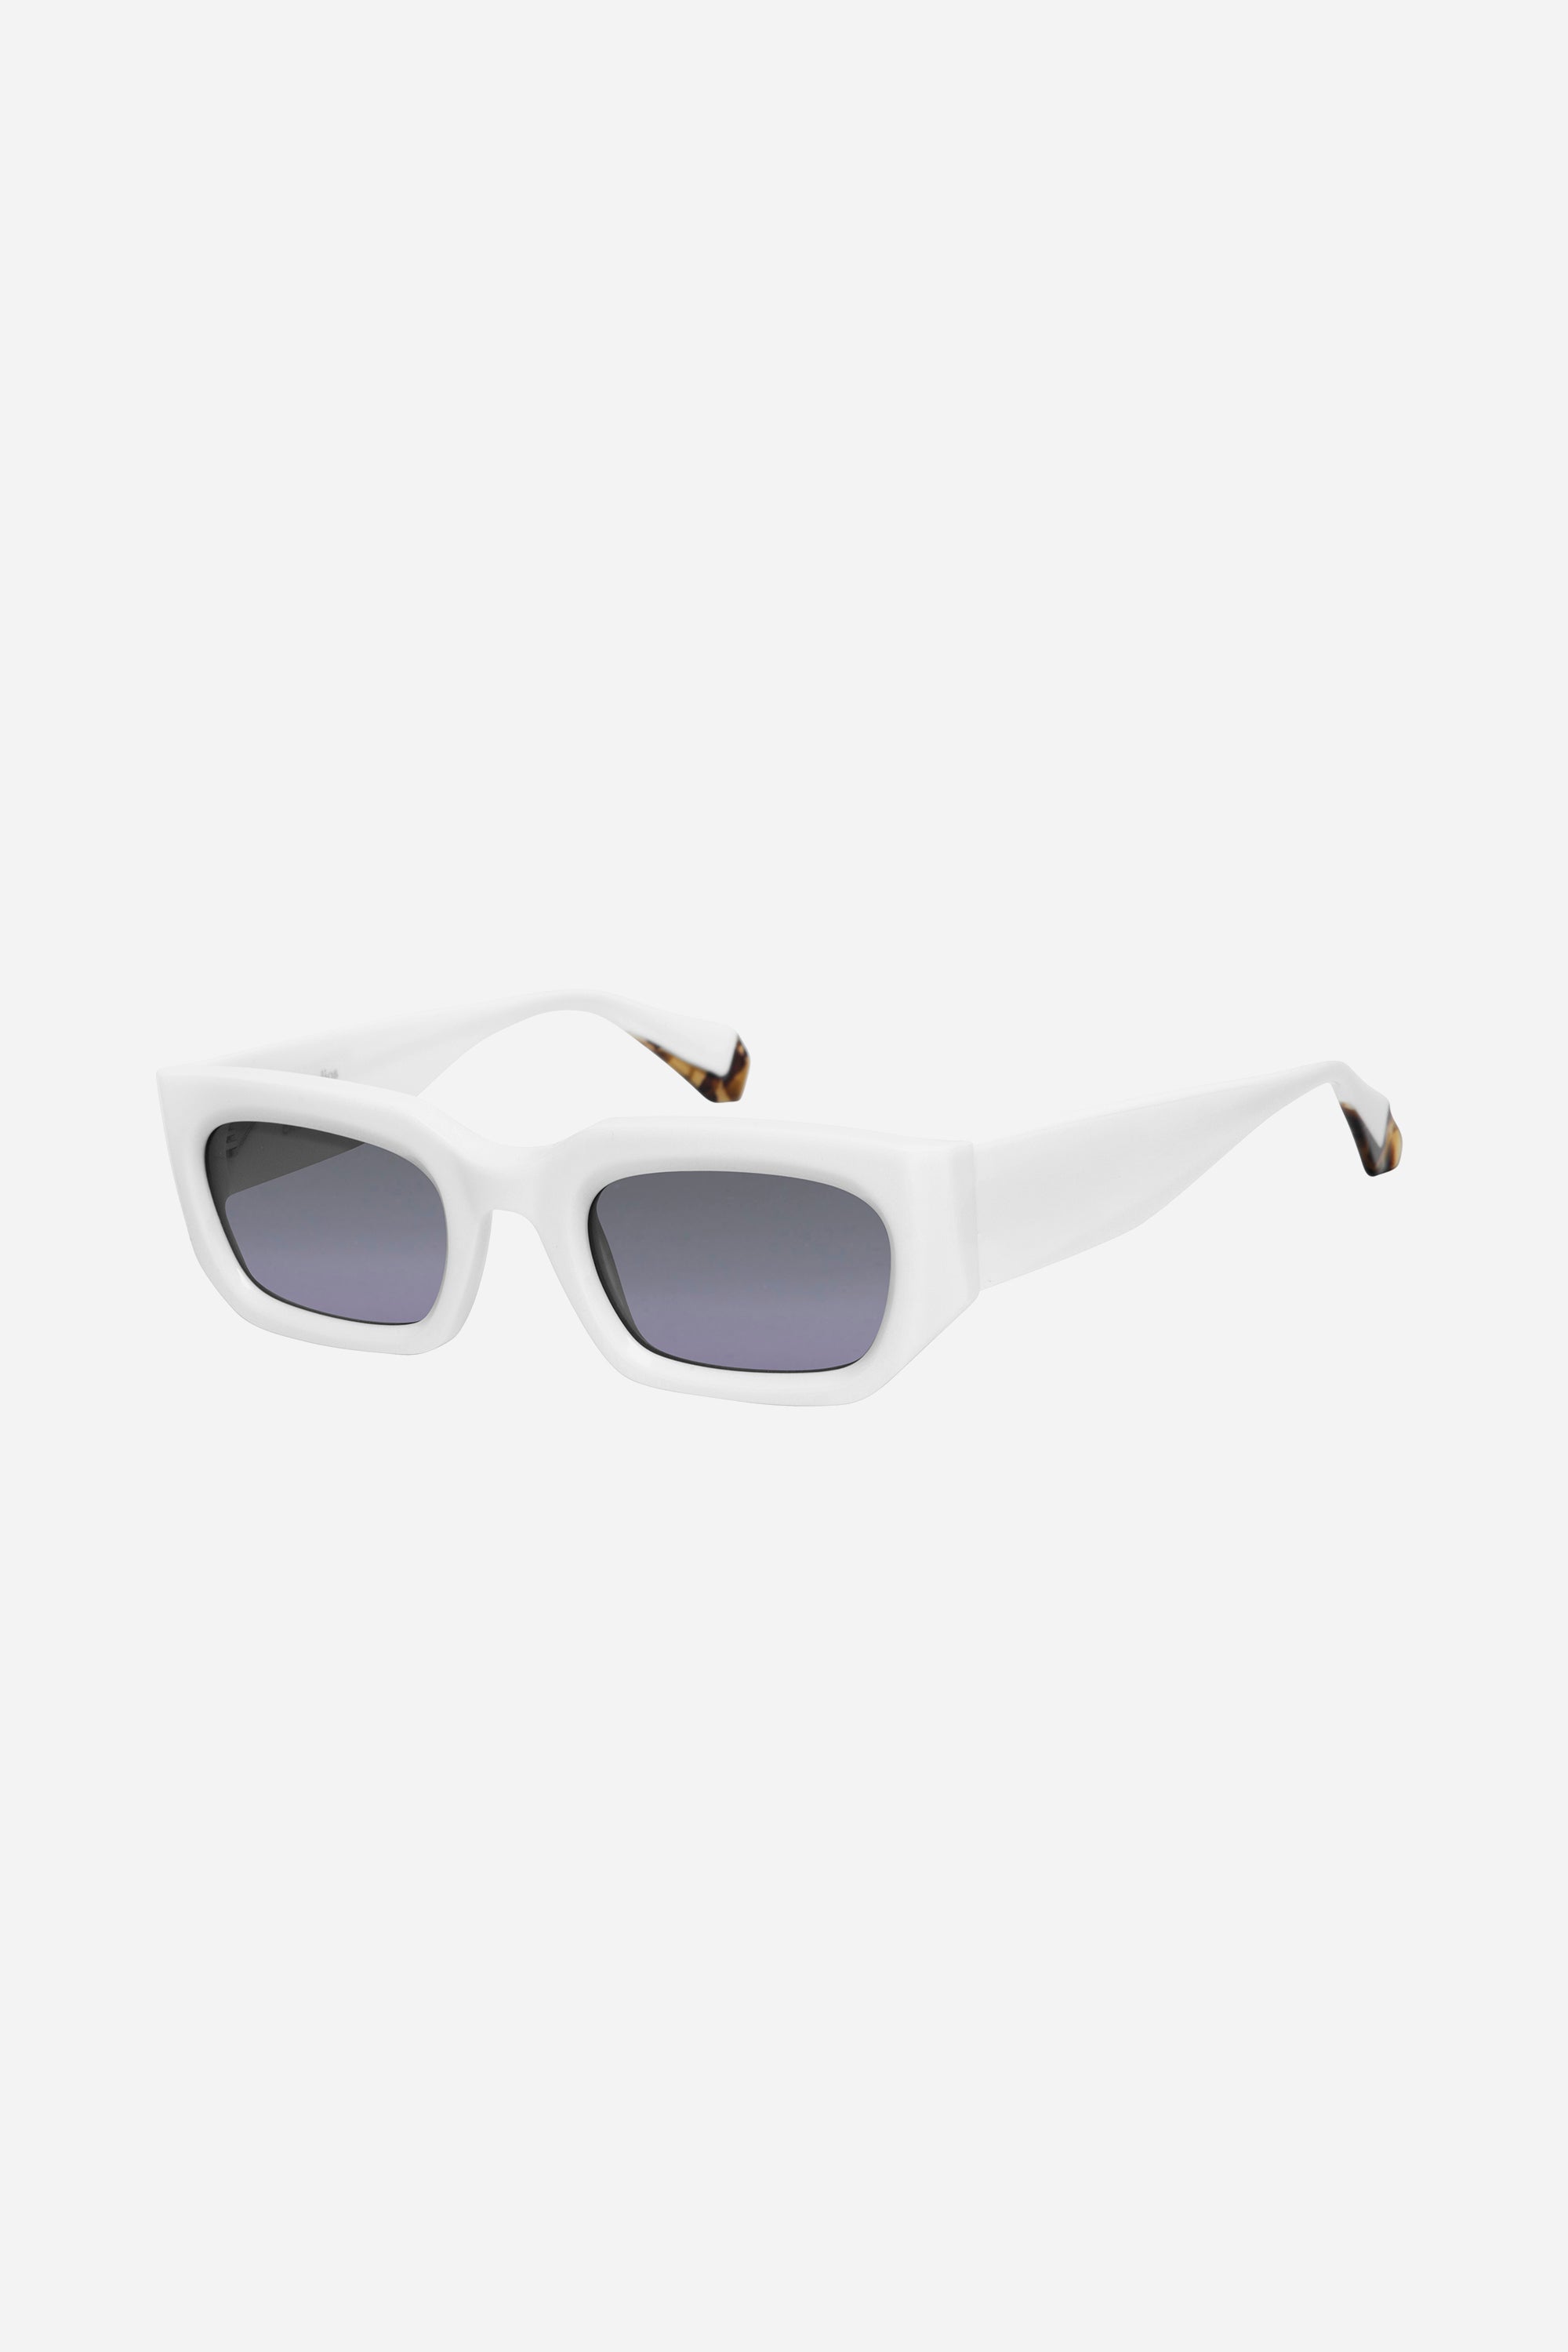 EXCLUSIVE Gigi Studios micro white sunglasses - Eyewear Club